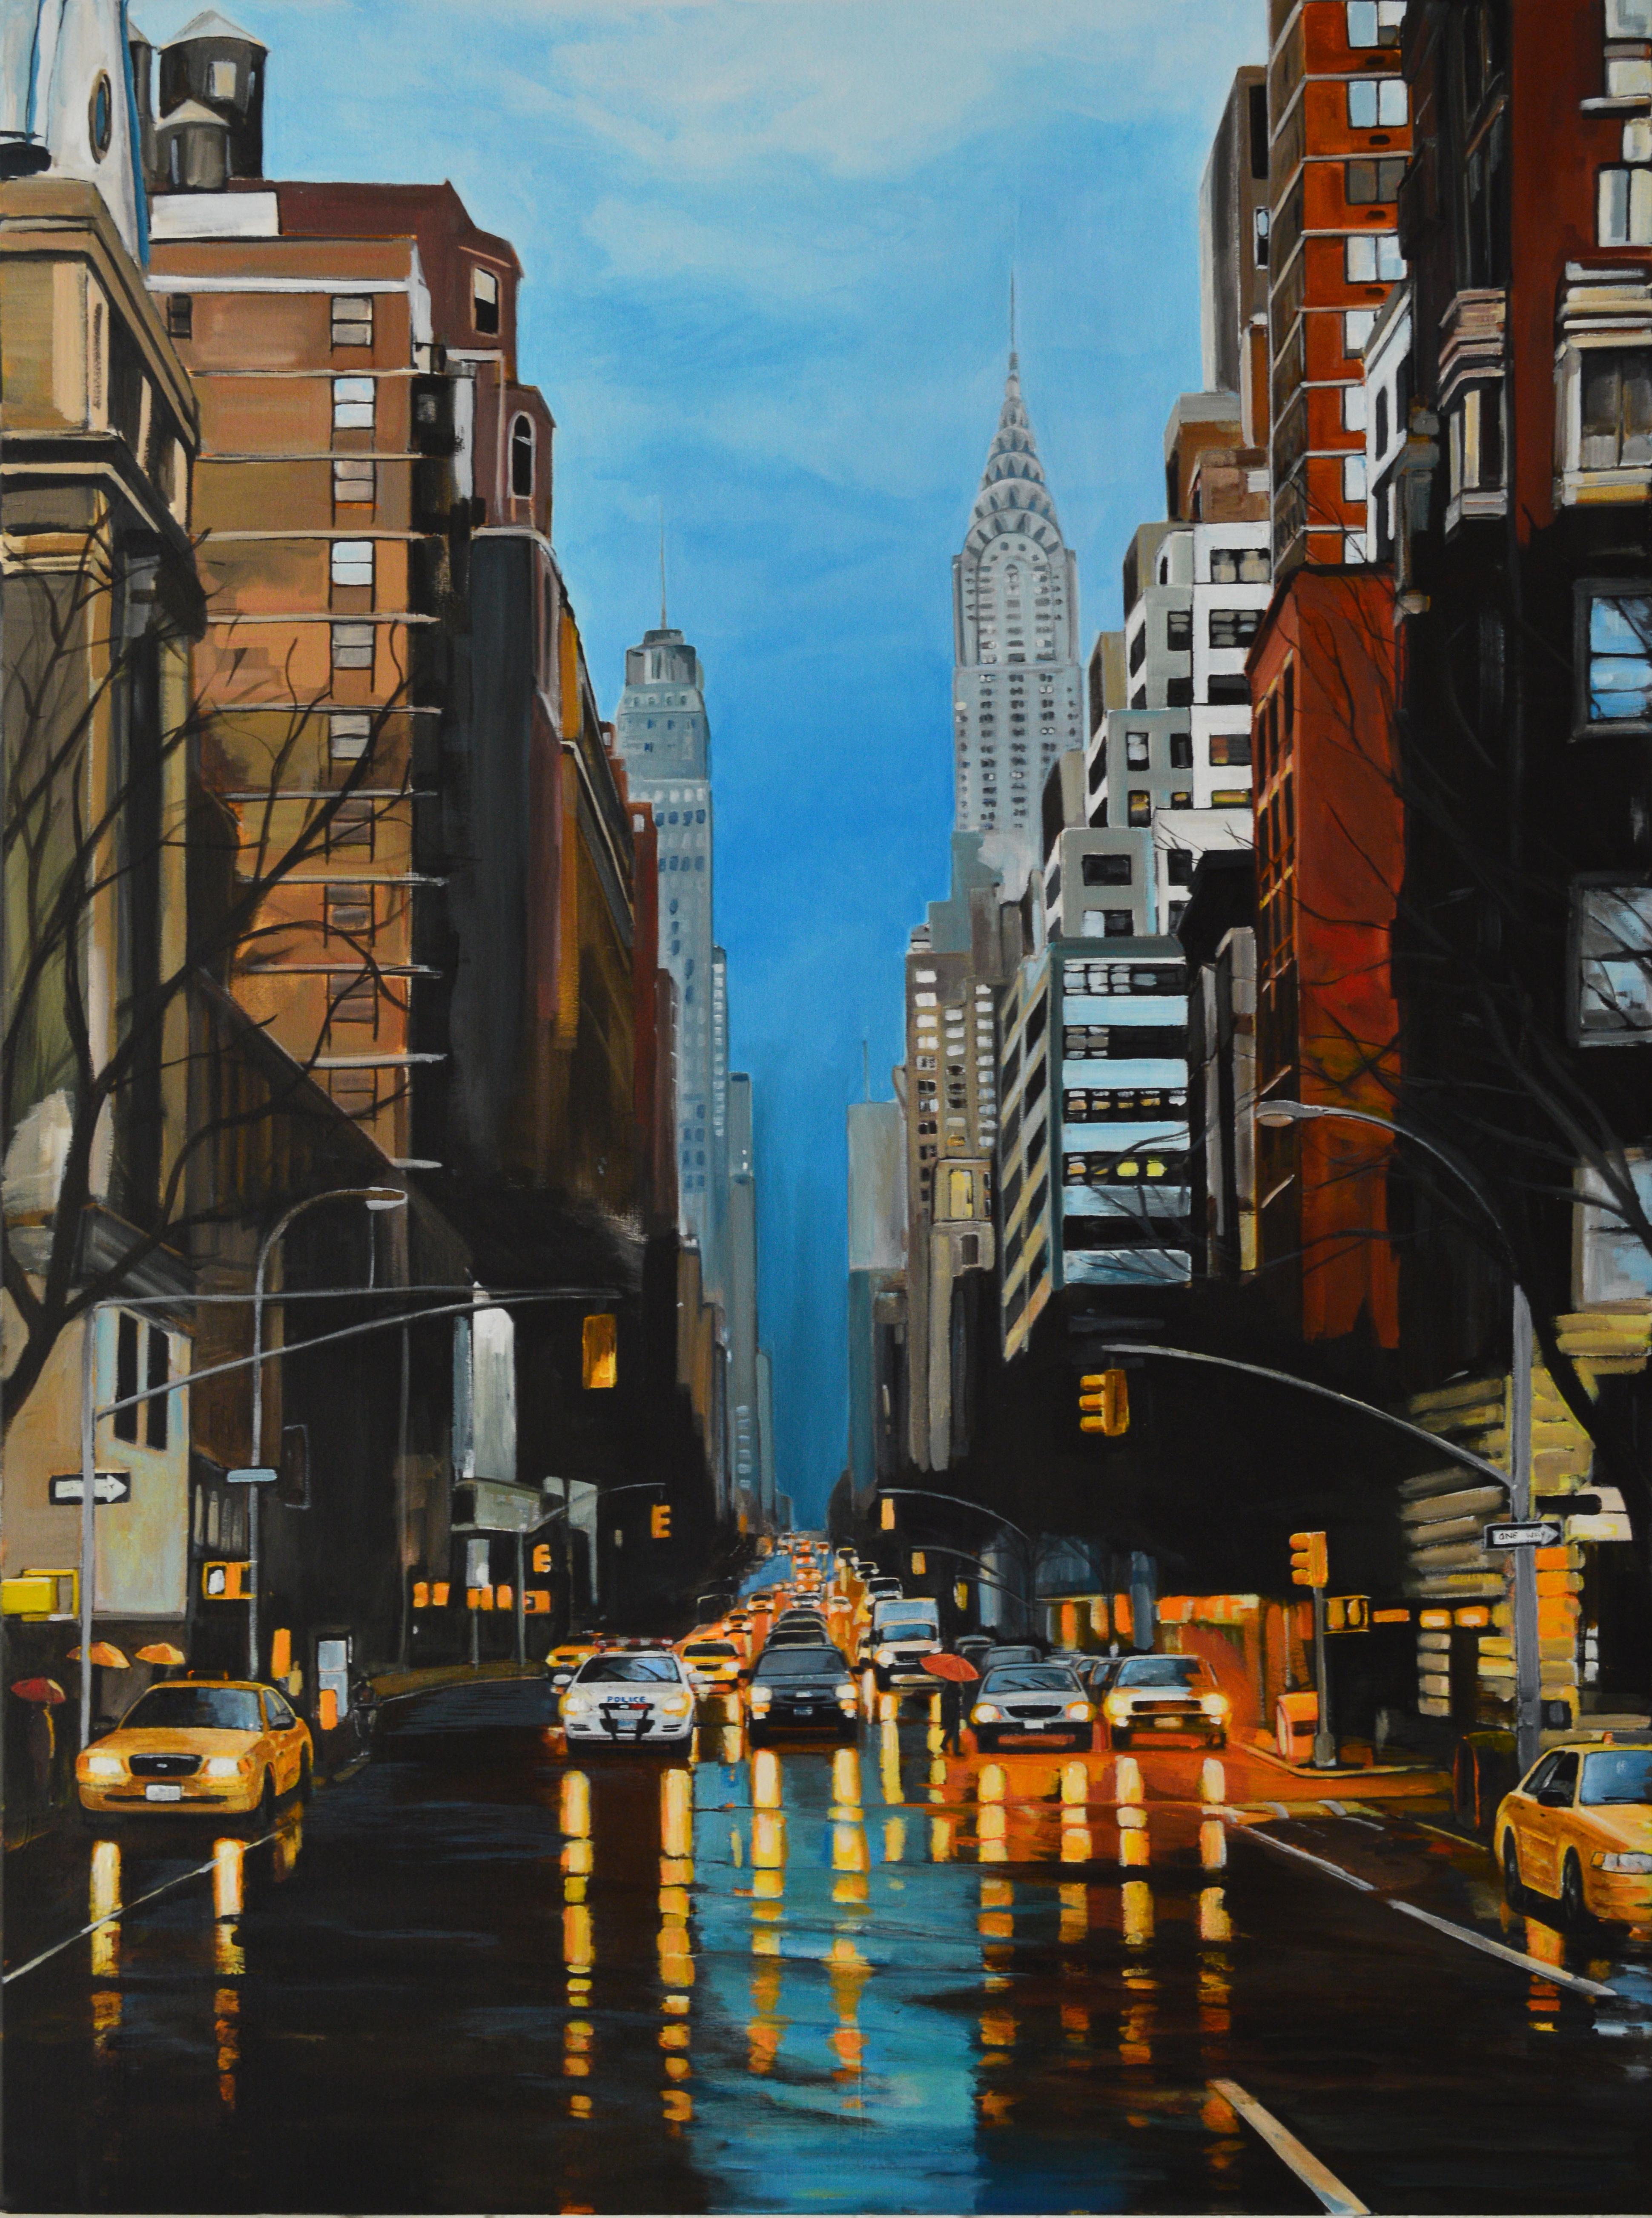 Angela Wakefield Figurative Print - Painting of New York Storm Rain on 42nd Street by Leading British Urban Artist